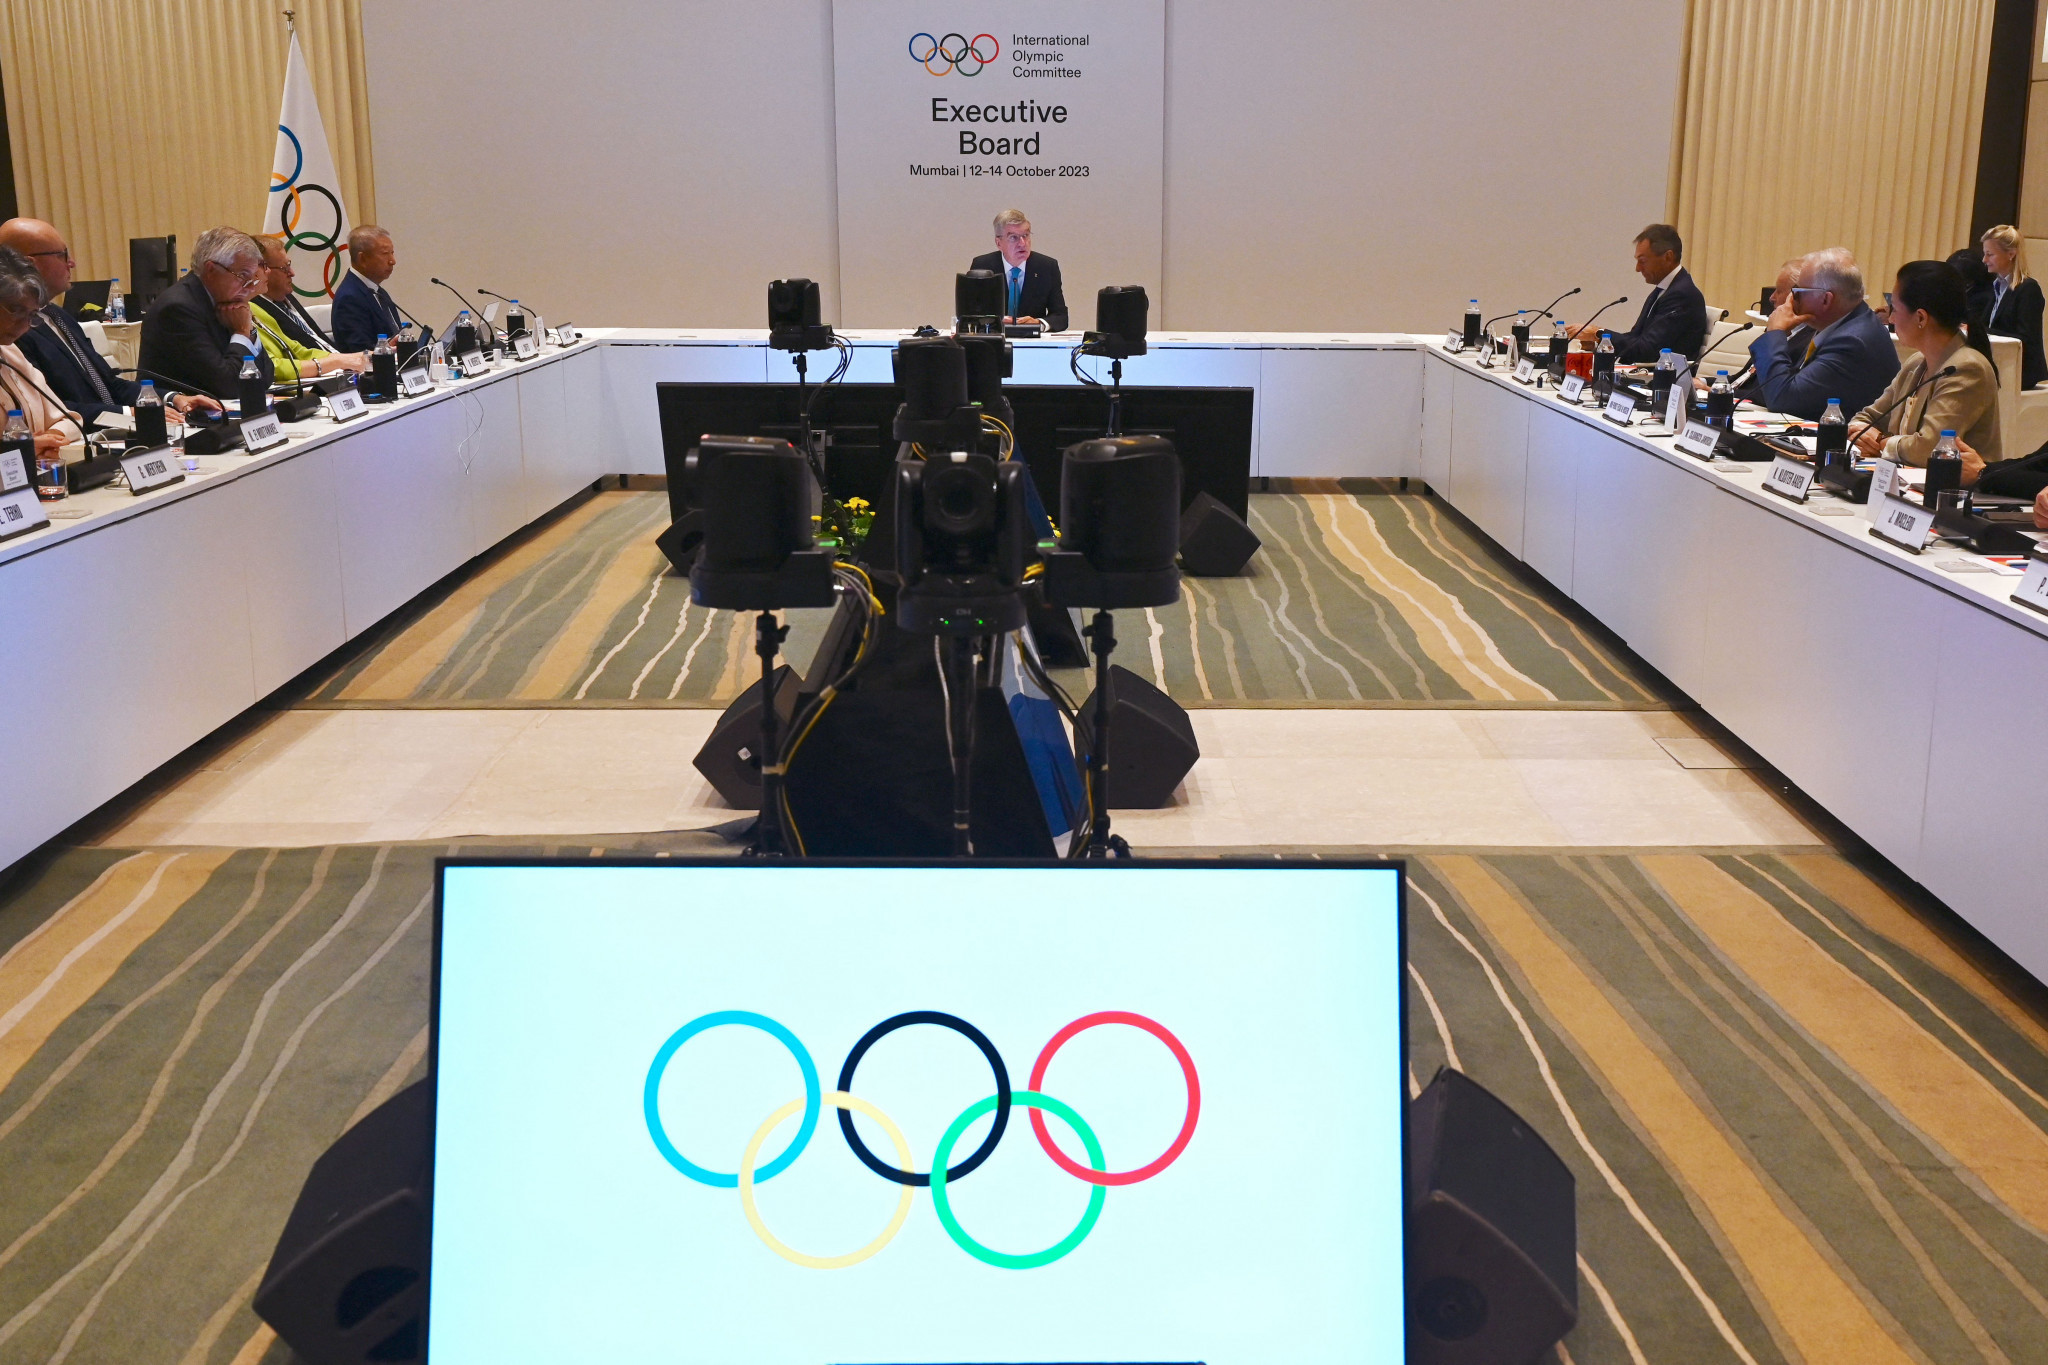 The IOC Executive Board expressed 